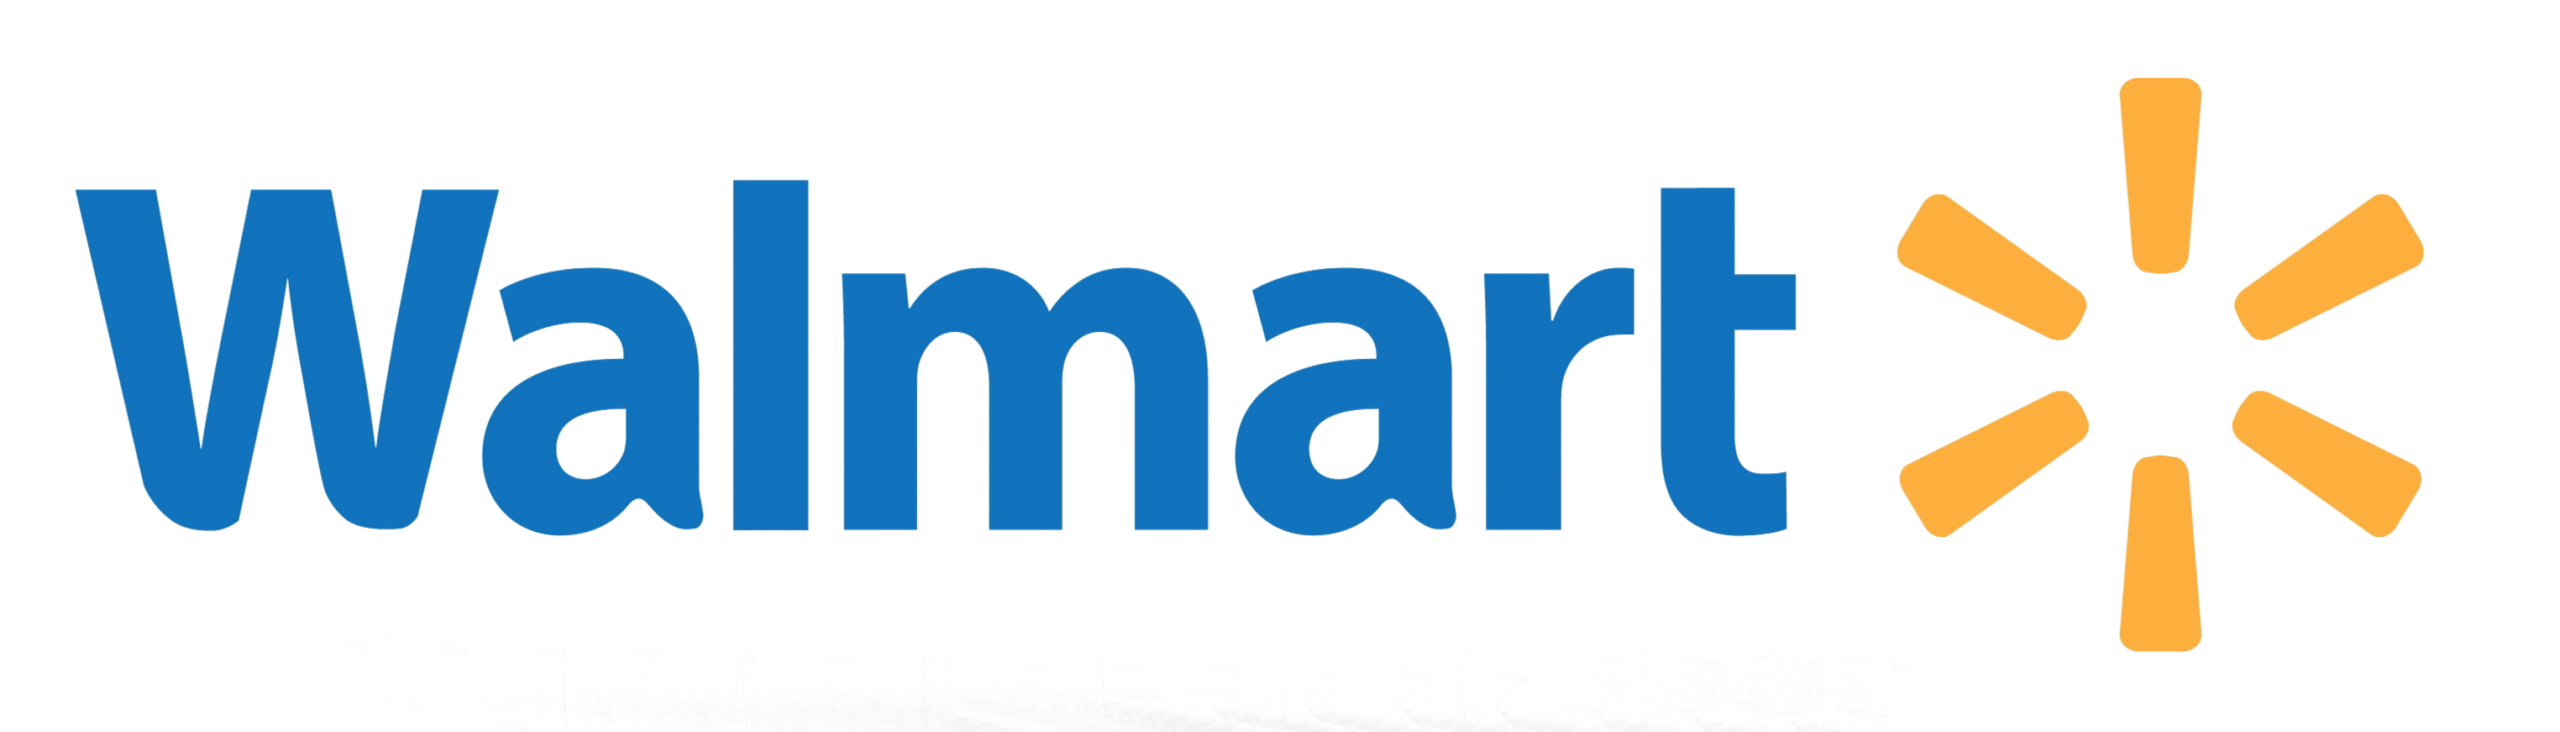 Walmart Chief Merchandising Officer Plans to Depart